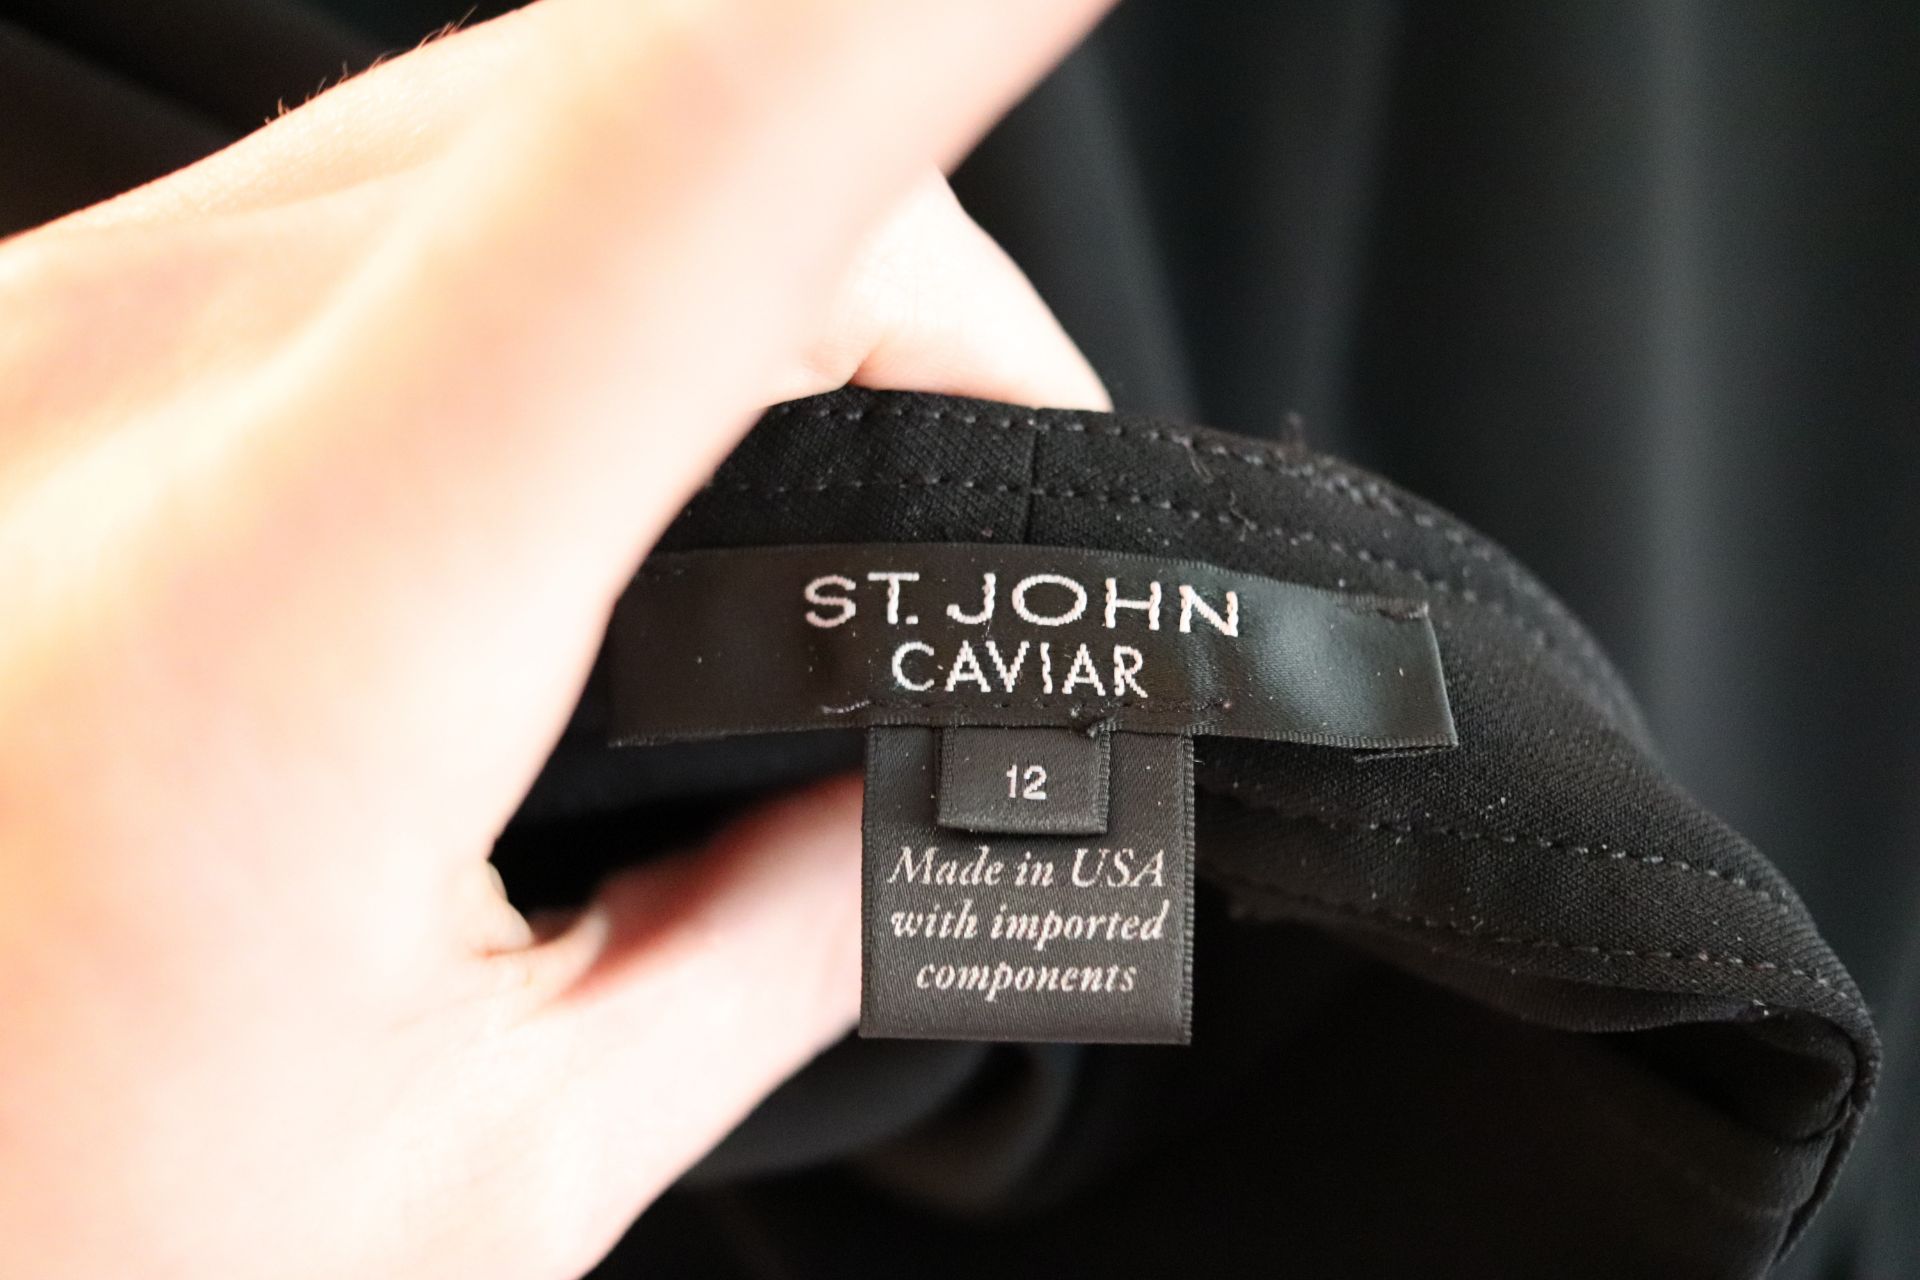 St John caviar coat and pants size 12 - Image 4 of 4